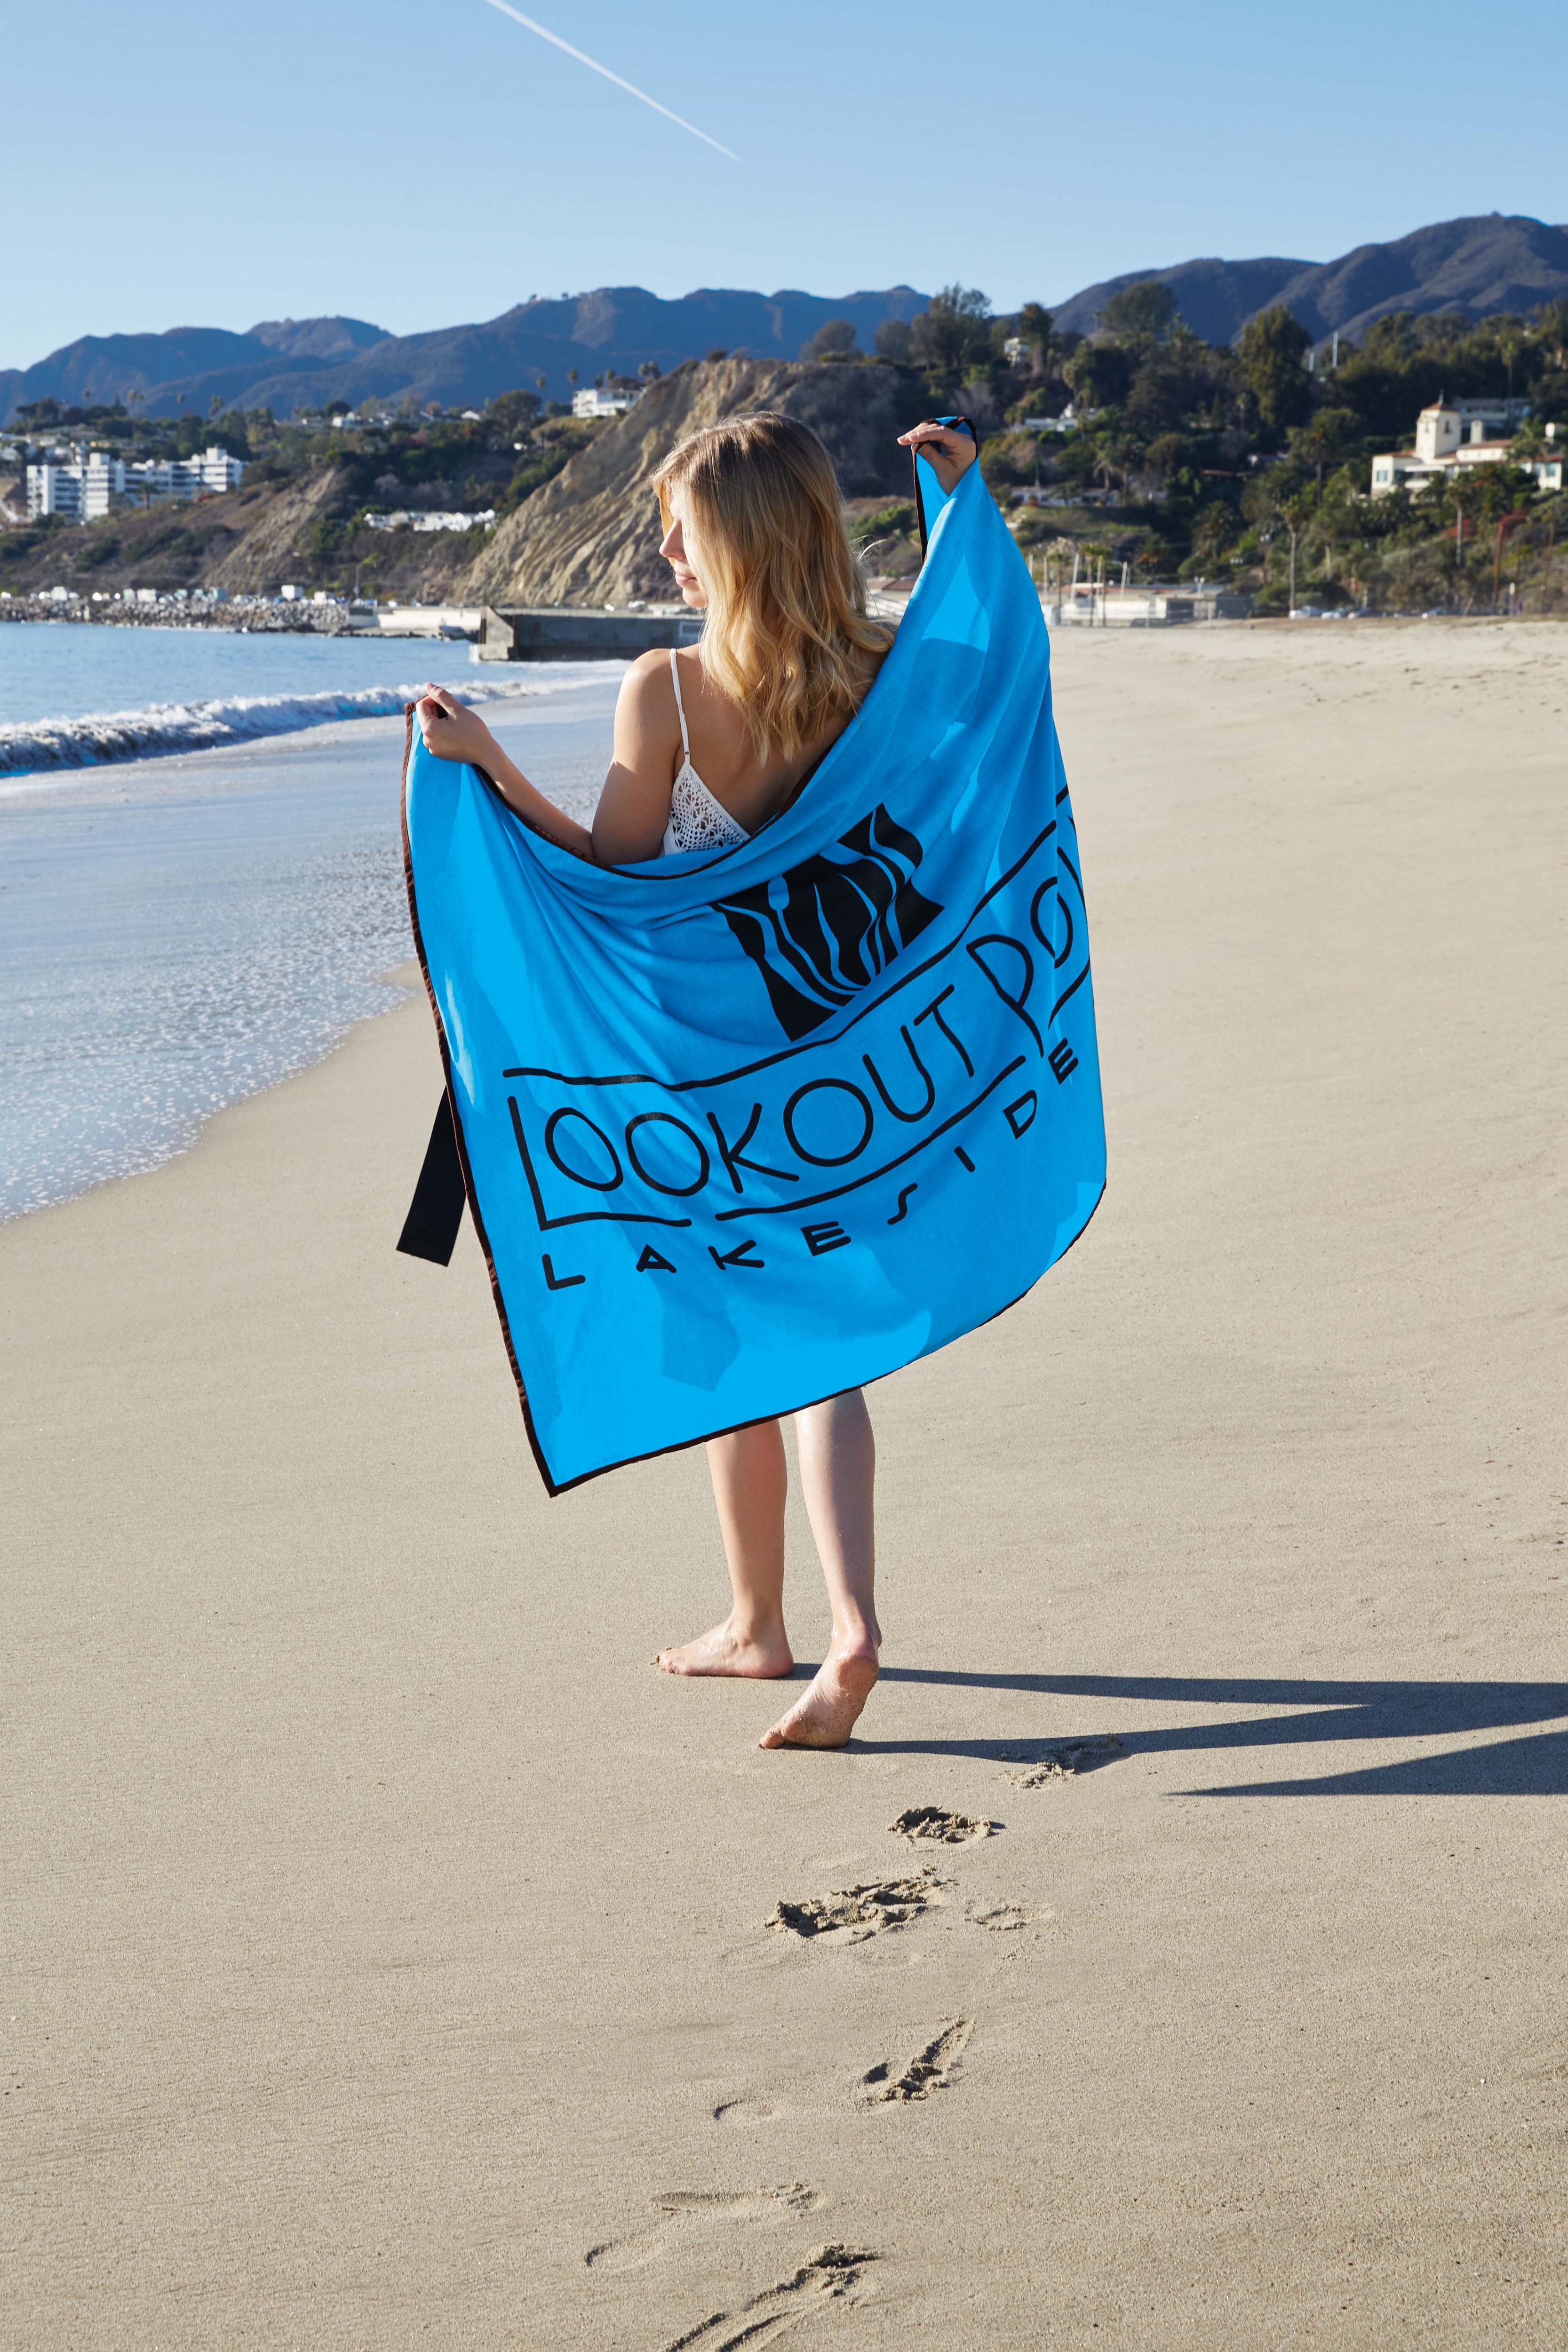 sand repellent beach towel